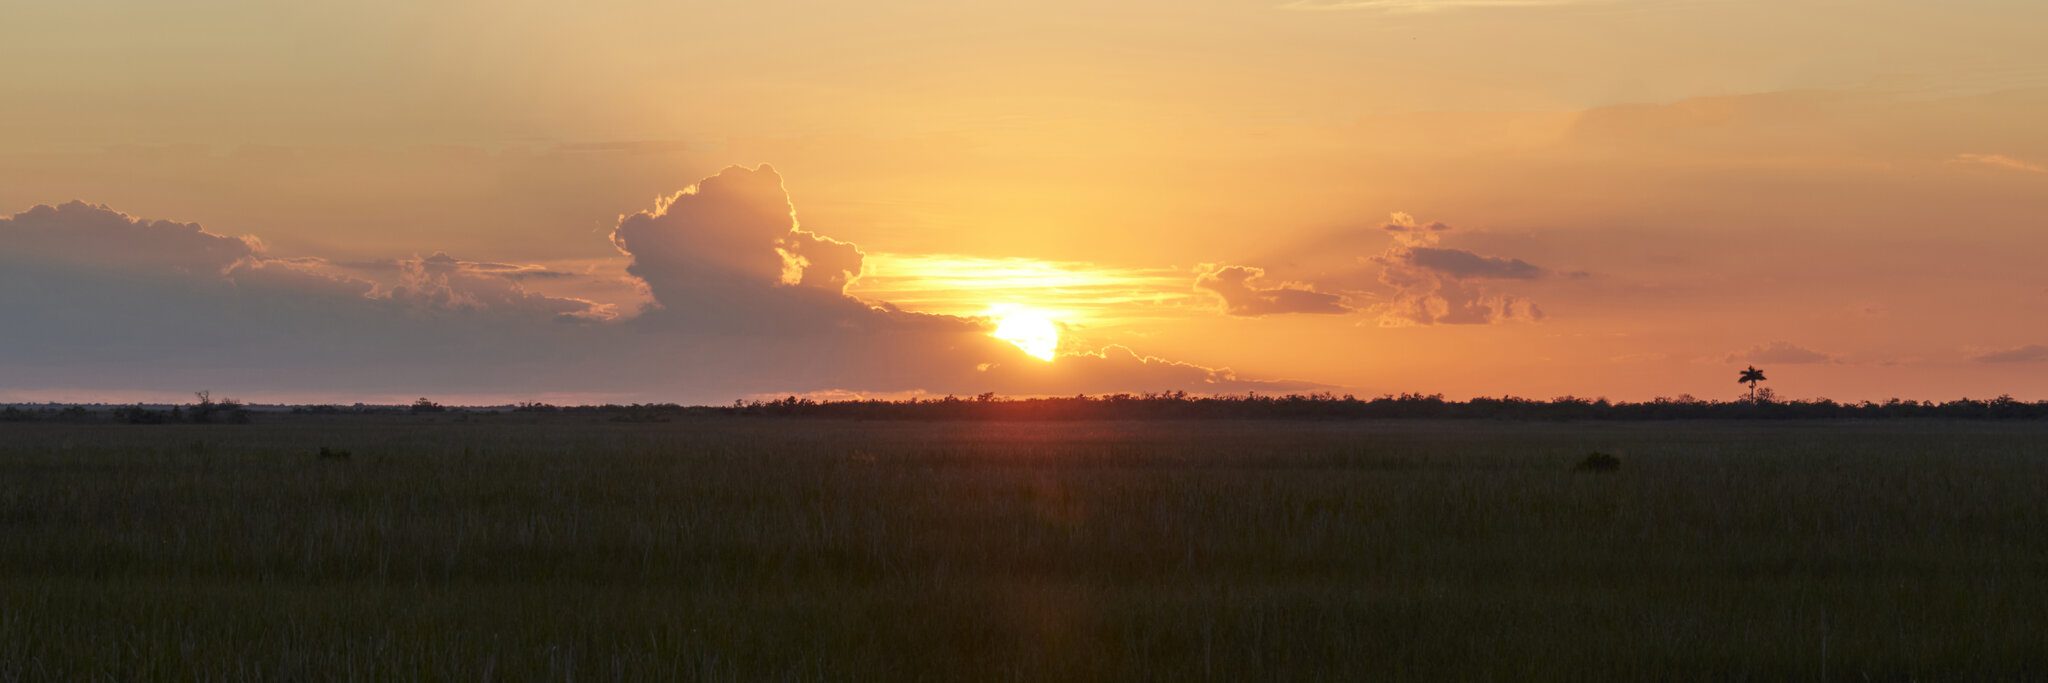 Sunset_Panorama1.2.jpg